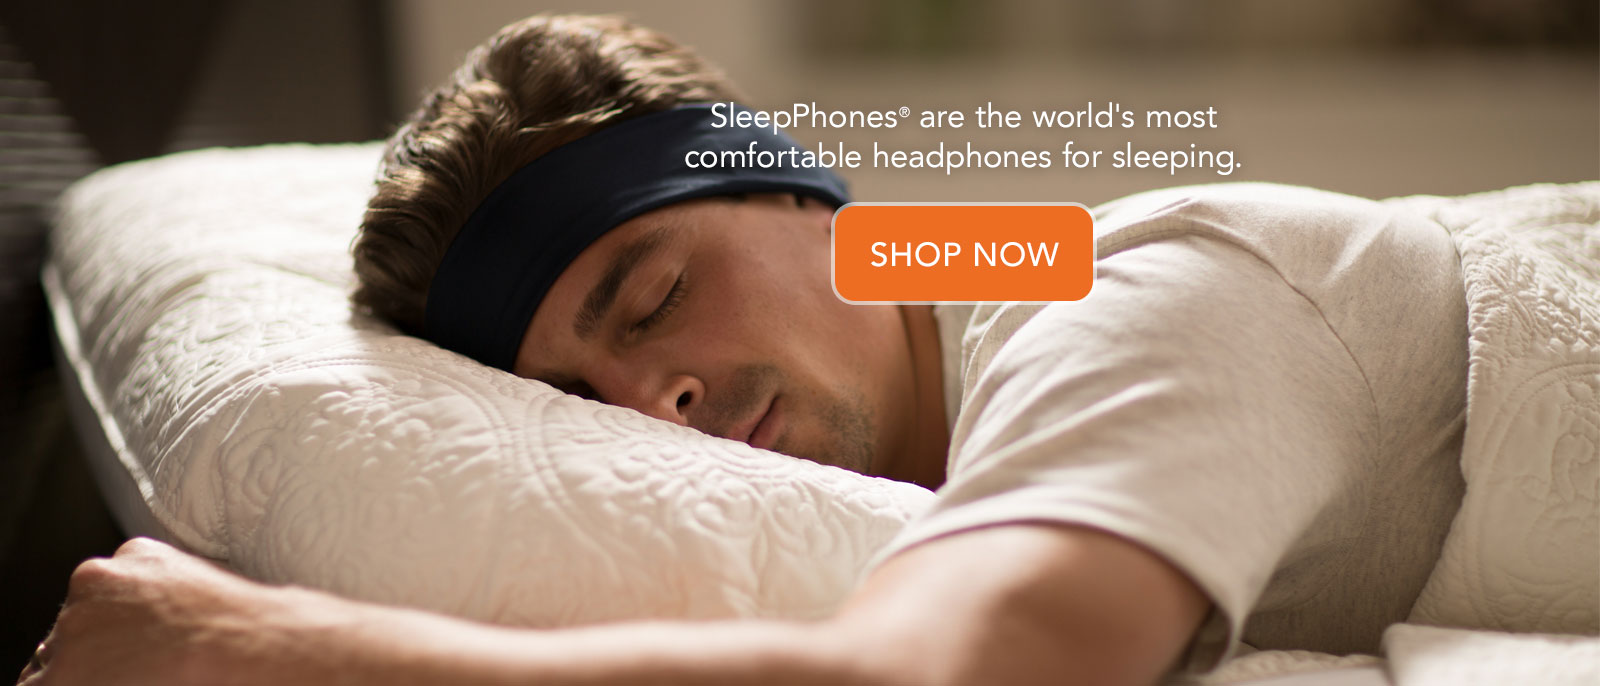 Shop now AcousticSheep SleepPhones are the world's most comfortable headphones for sleeping. Man sleeping on side with black sleep headband headphones.